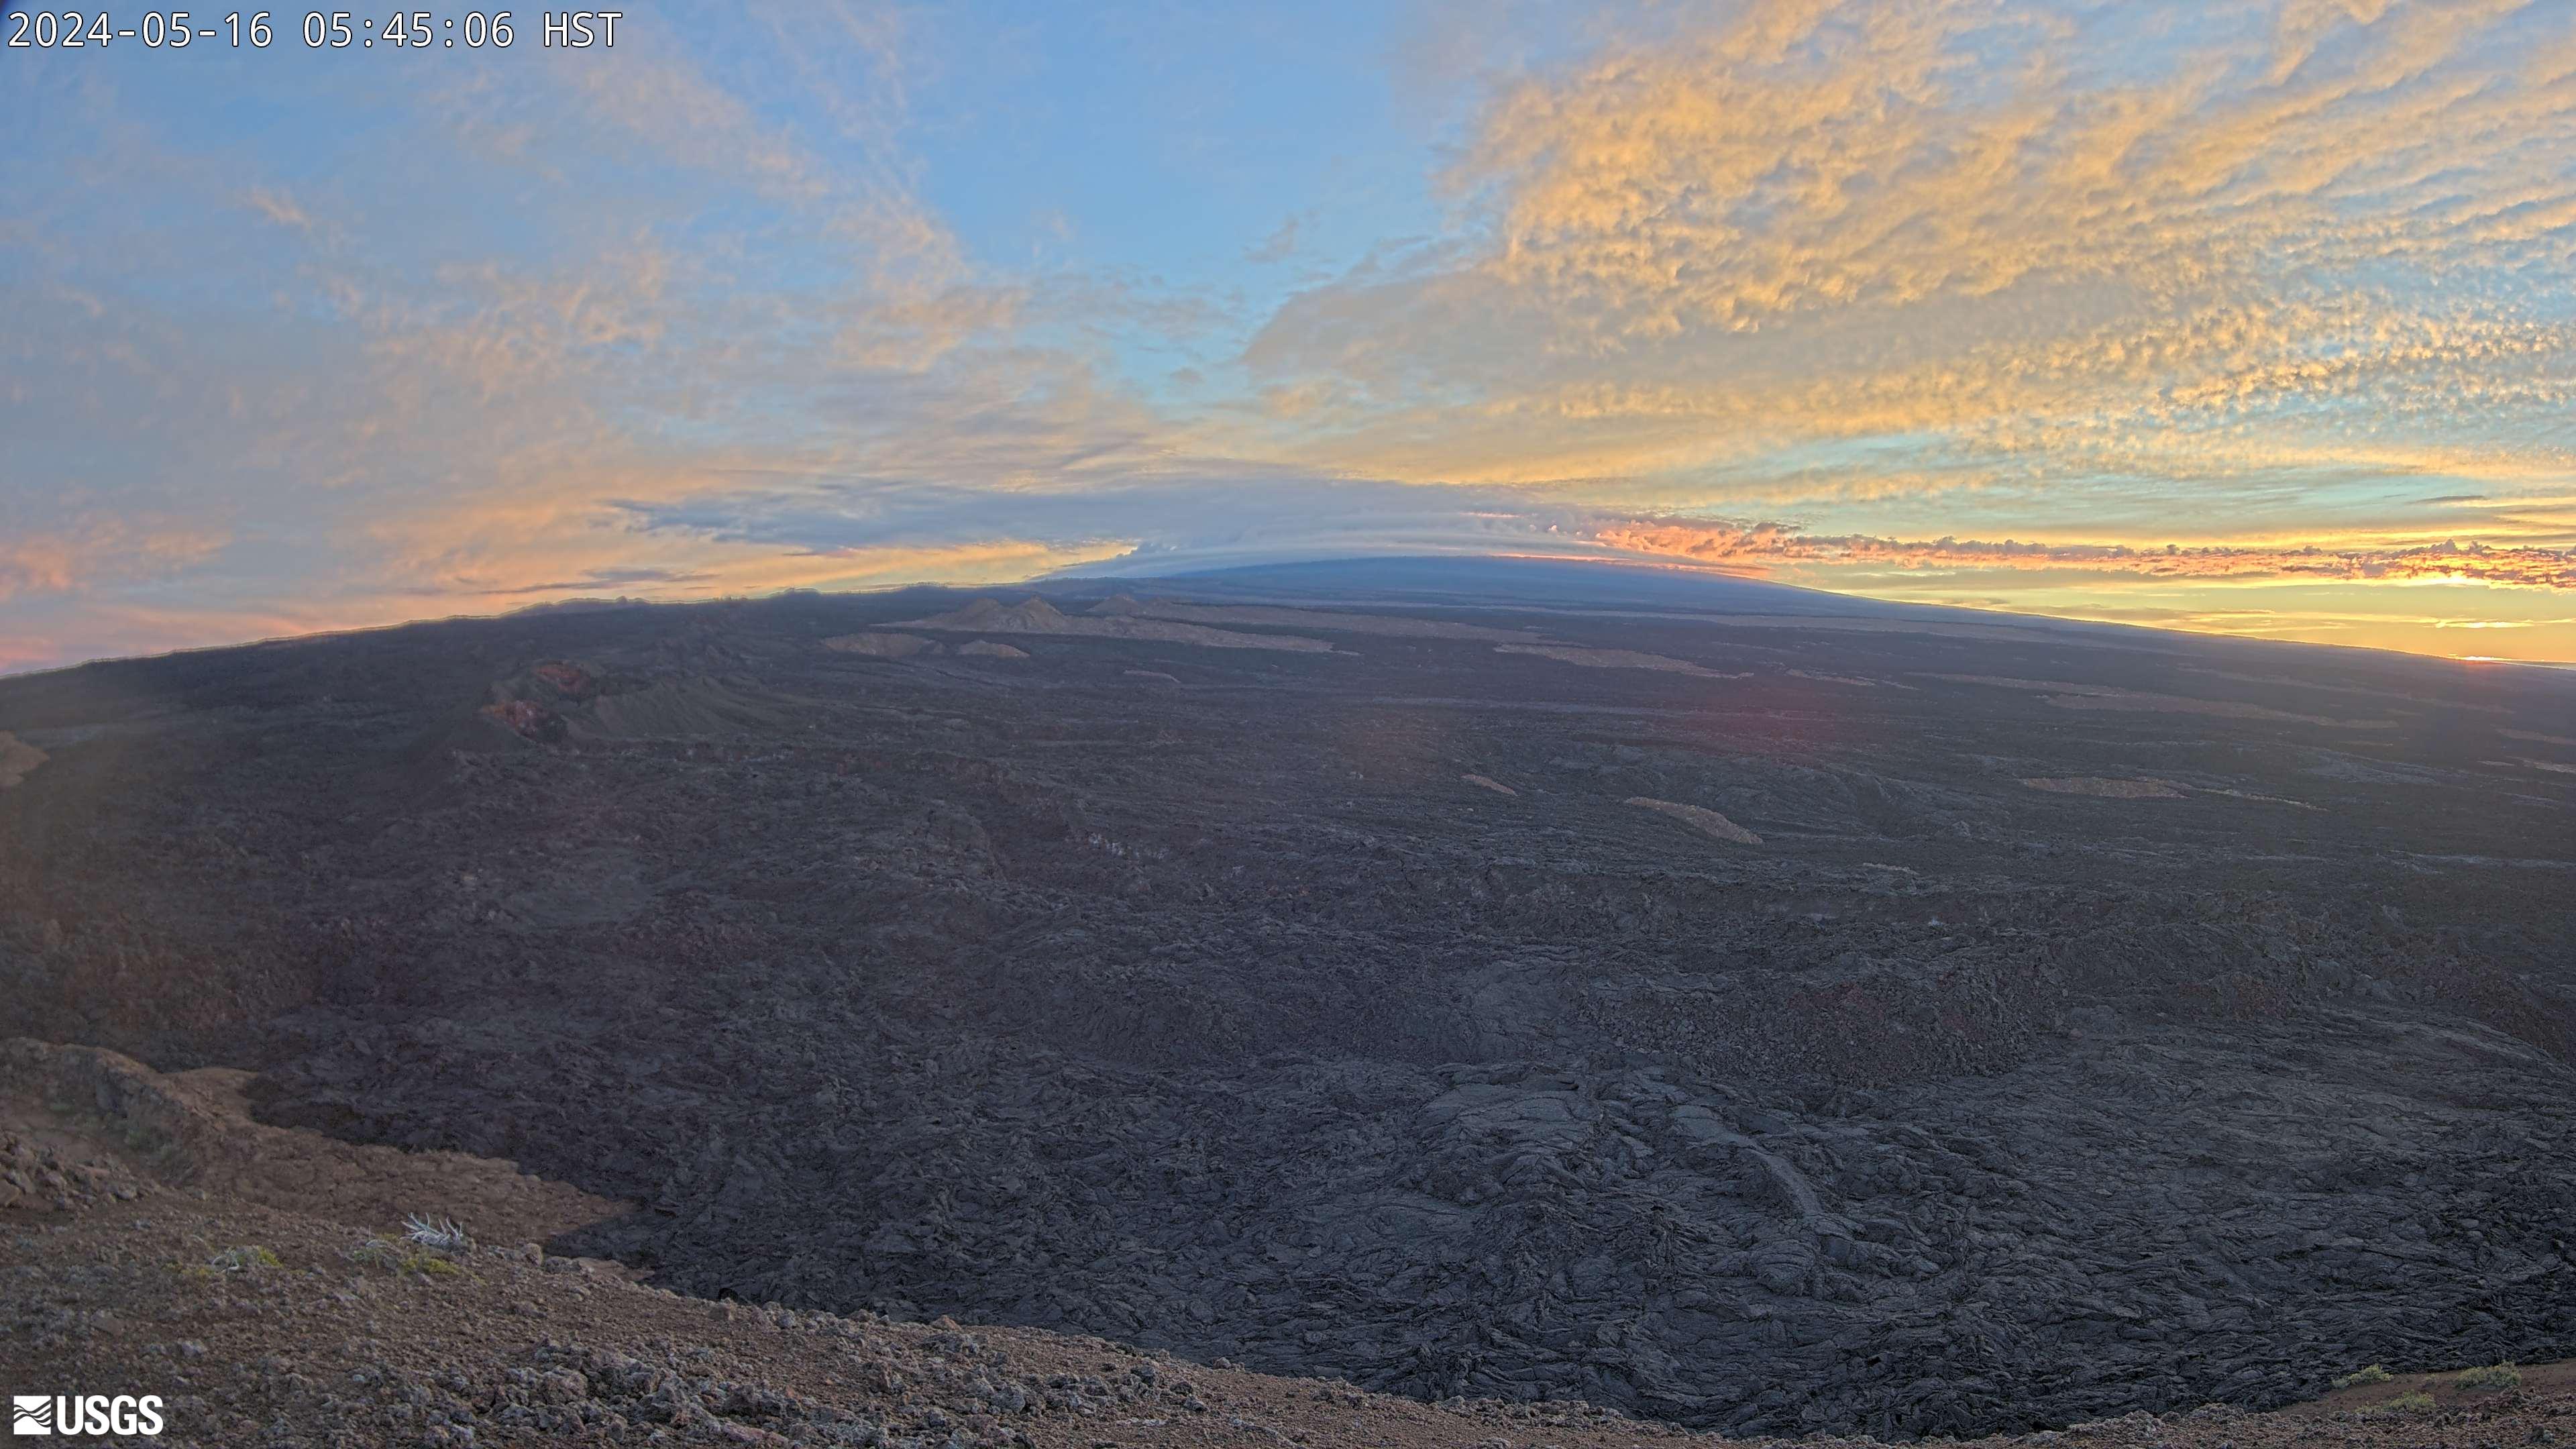 Mauna Loa, Hawaii Tir. 05:57